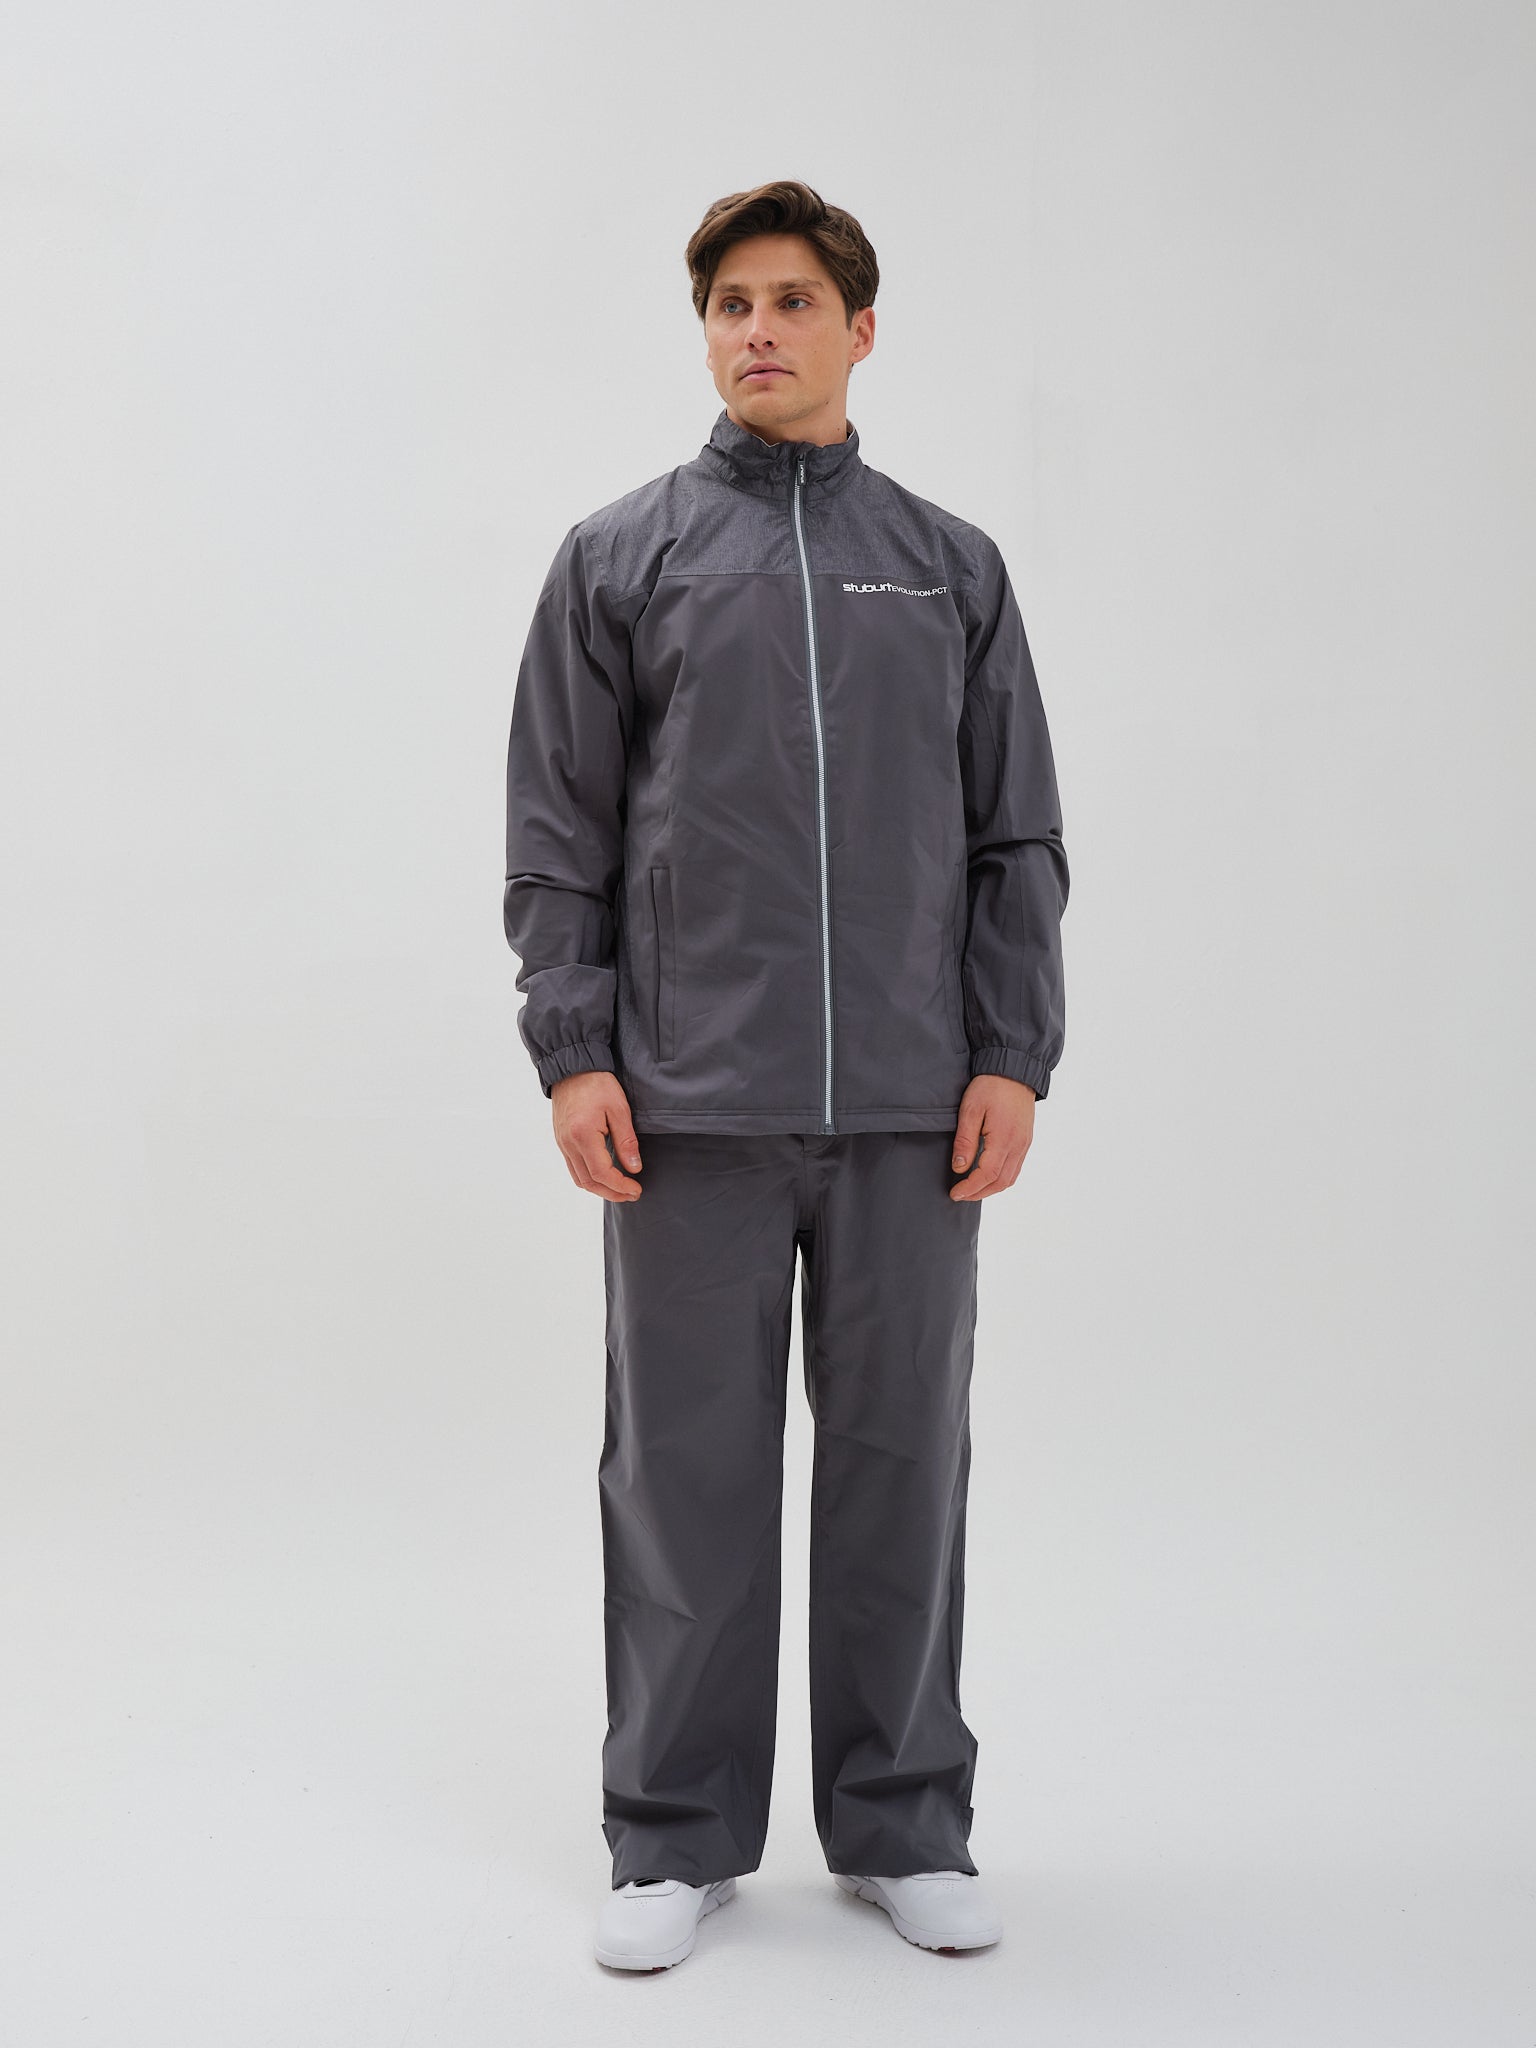 Evolution PCT Waterproof Suit - Stuburt